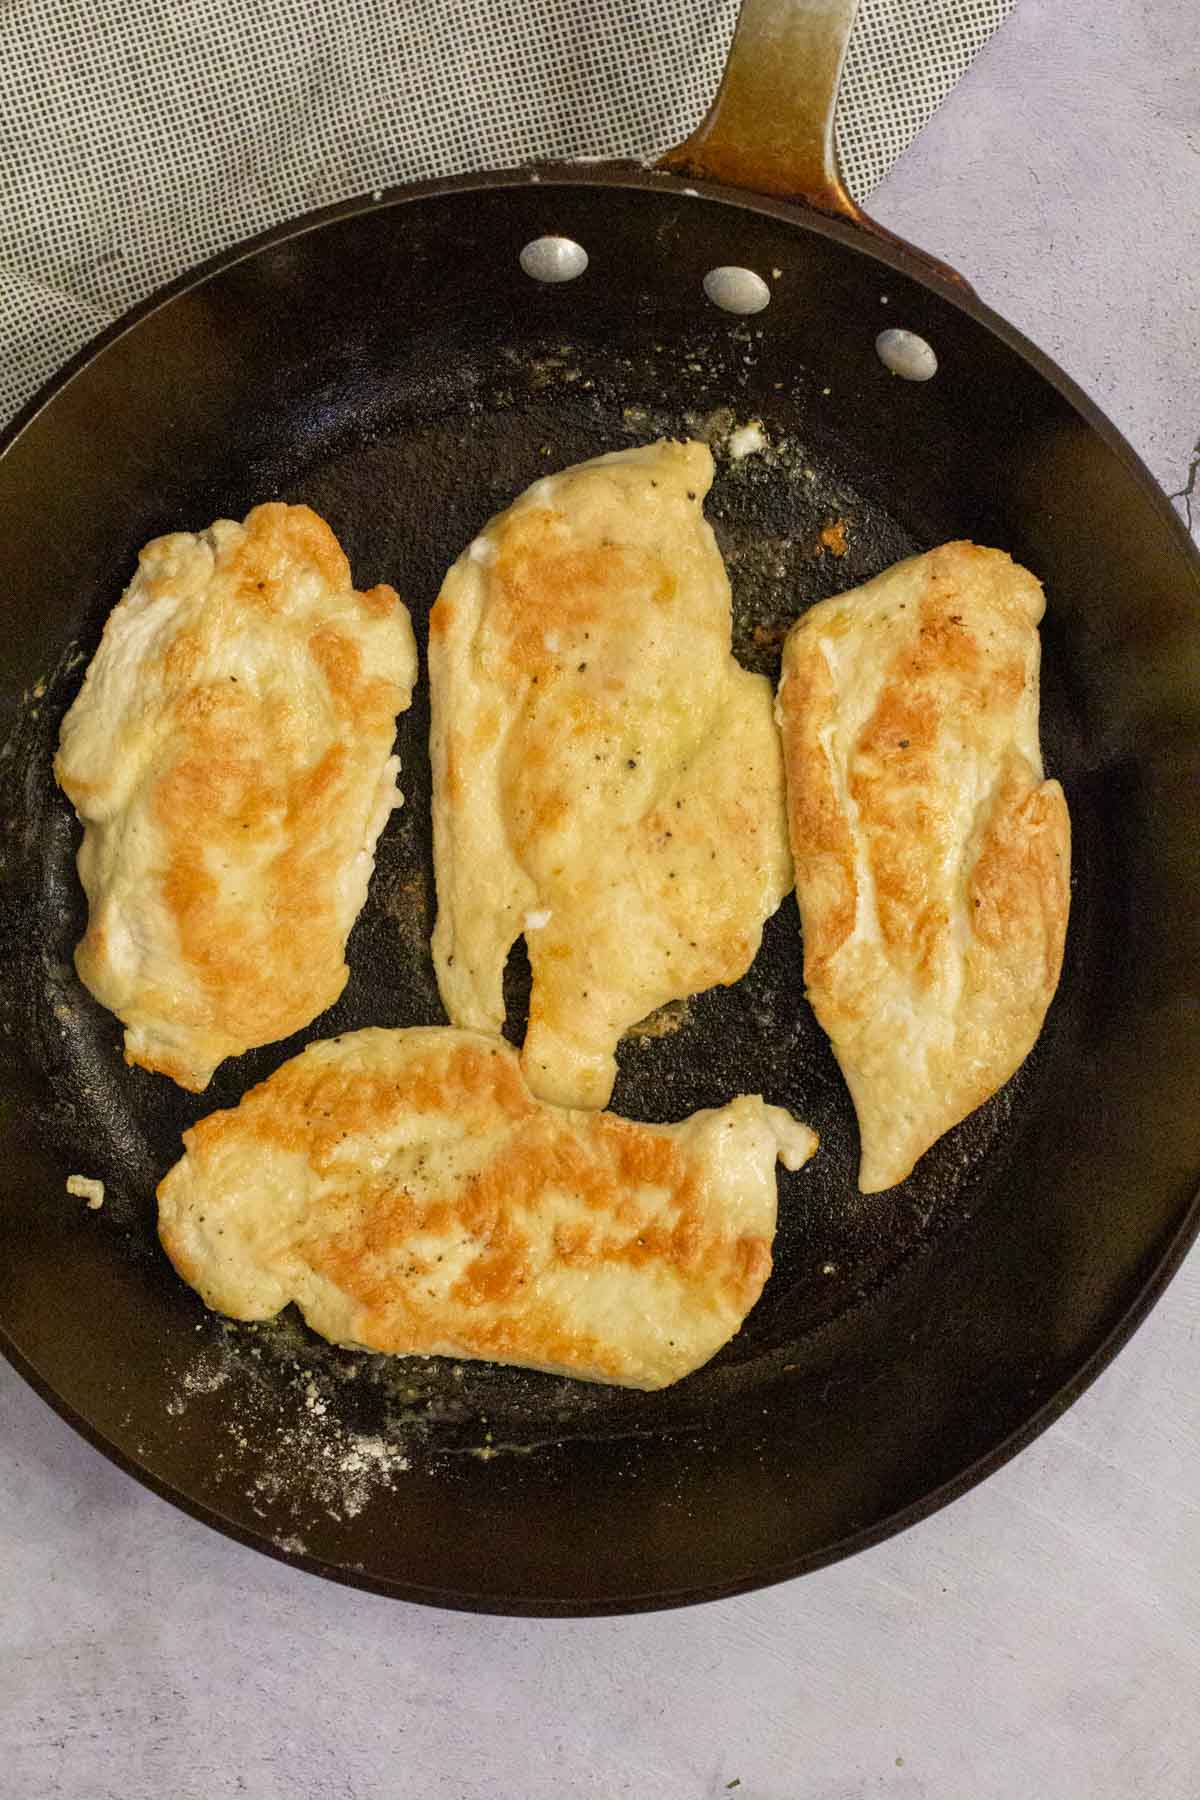 Frying boneless skinless chicken breasts.